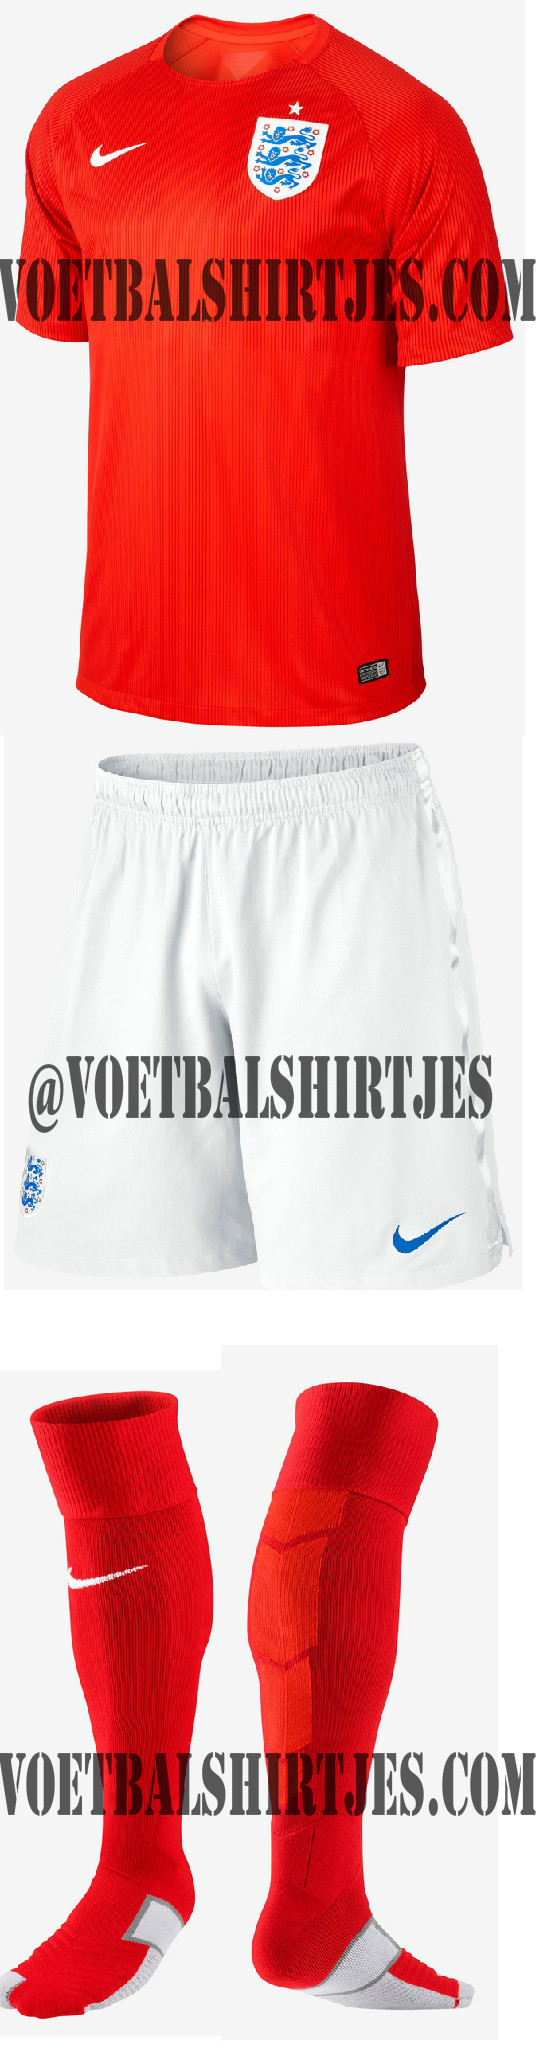 Nike England away kit 2014